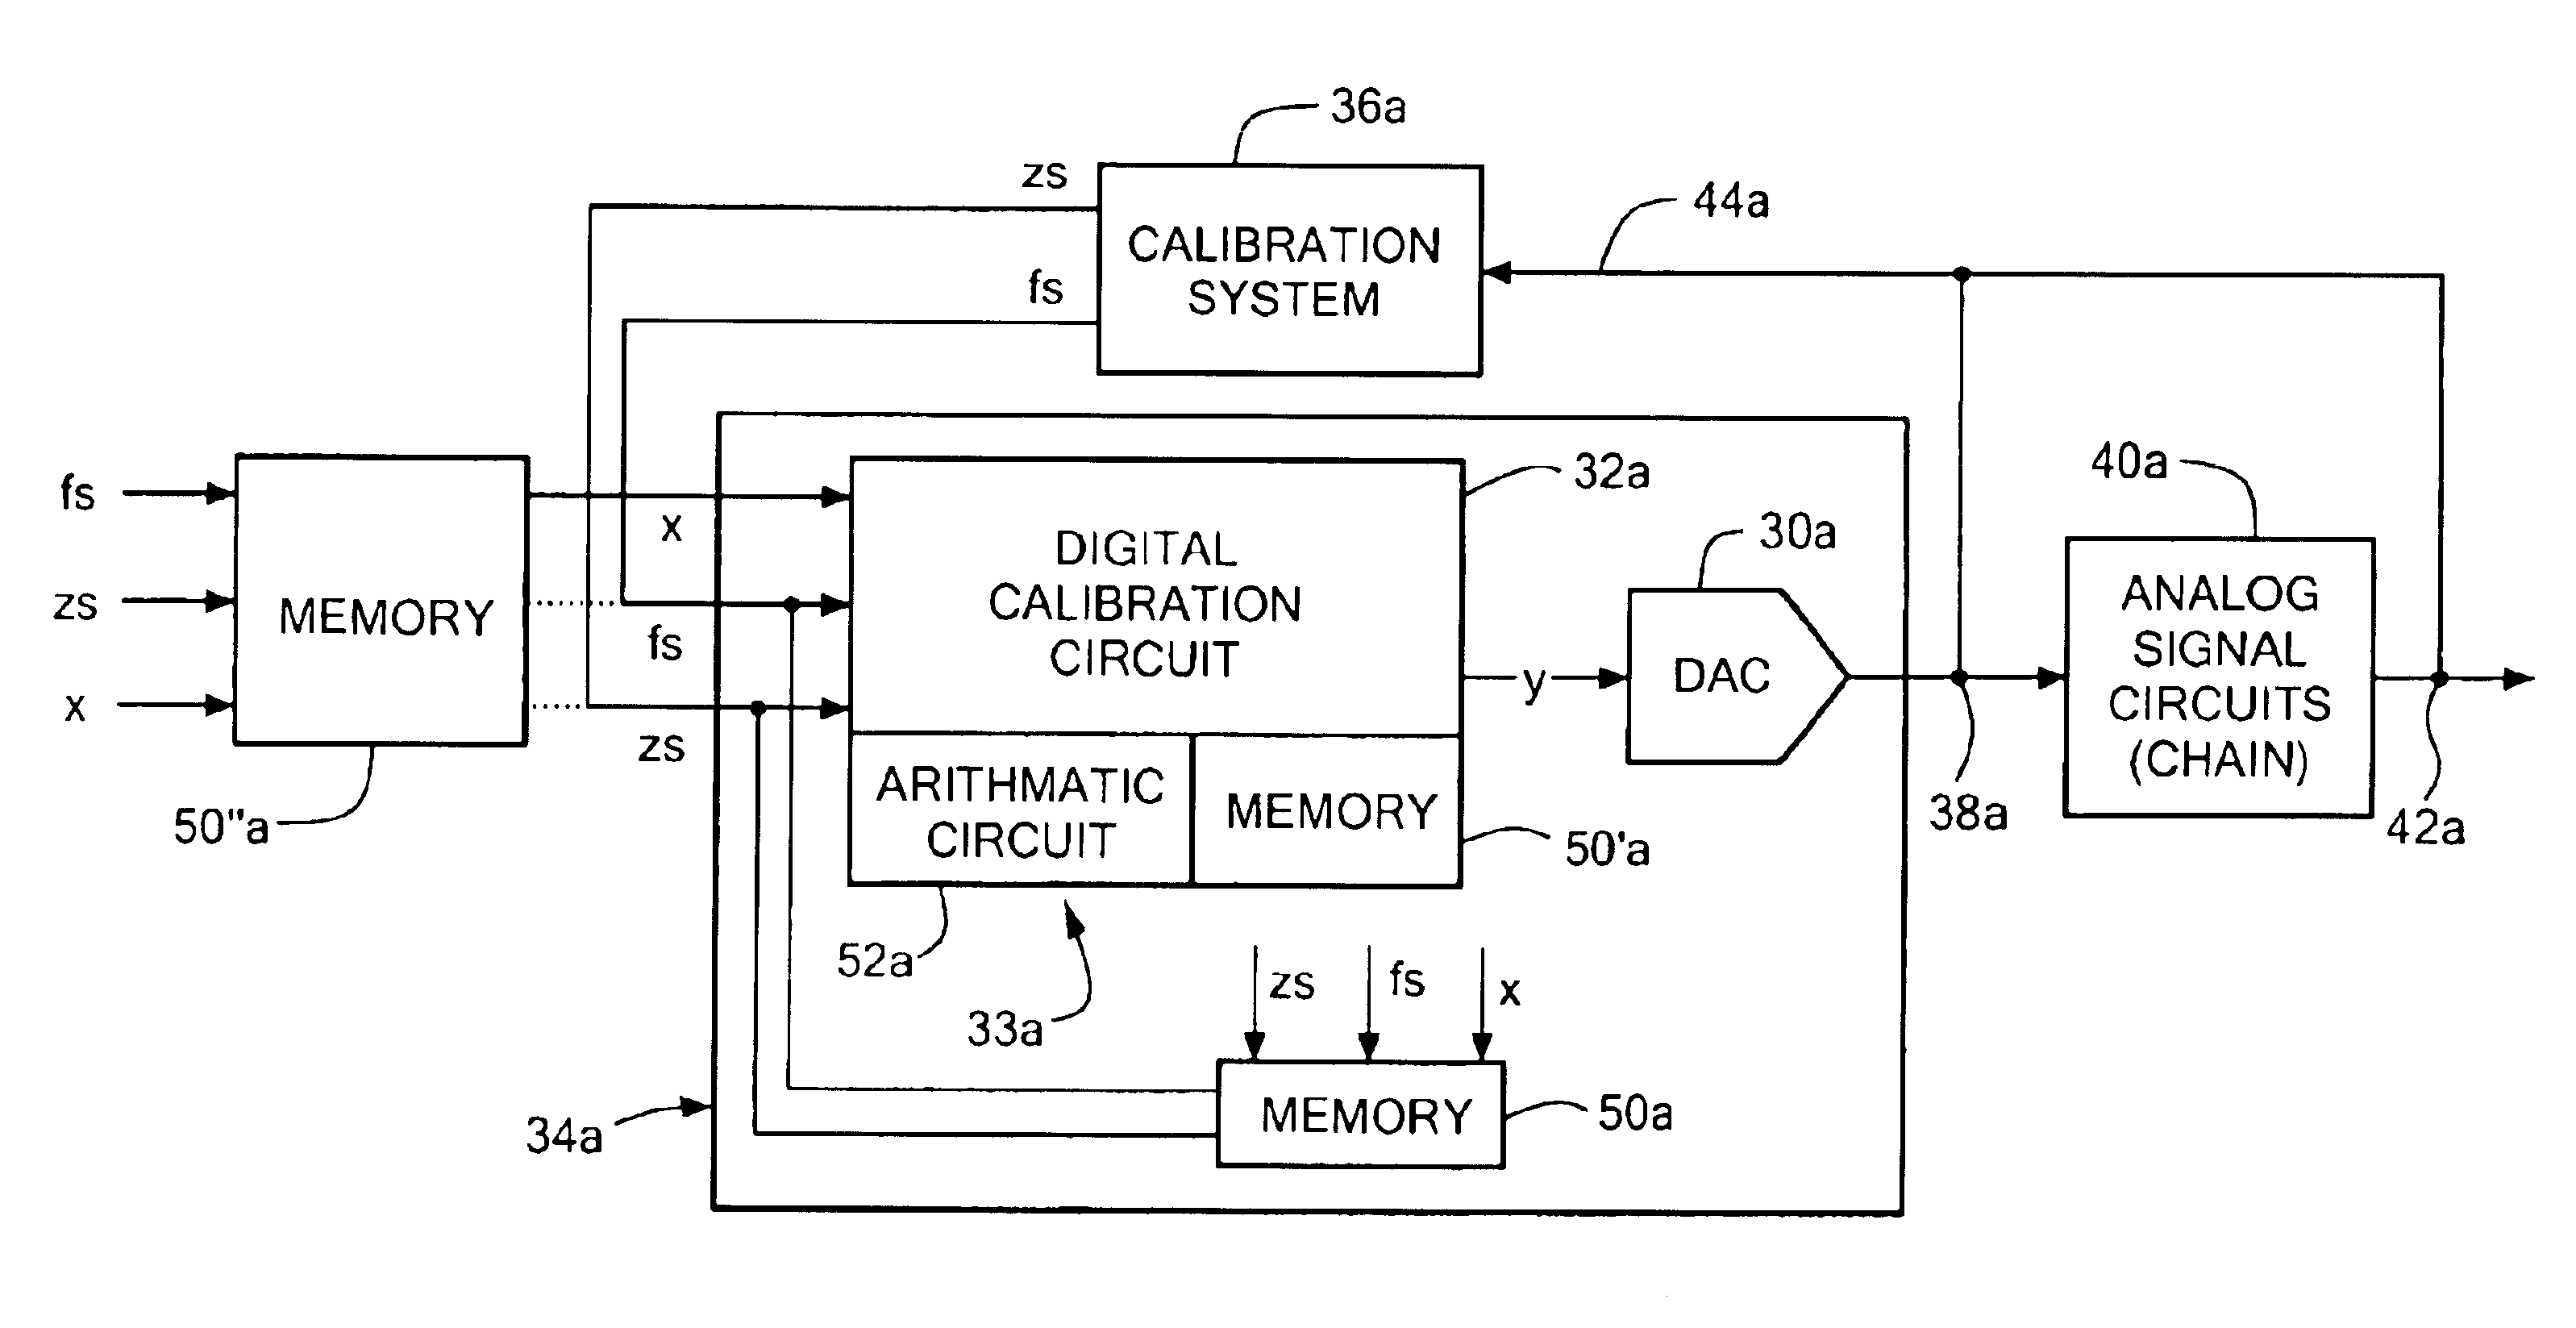 Integrated digital calibration circuit and digital to analog converter (DAC)